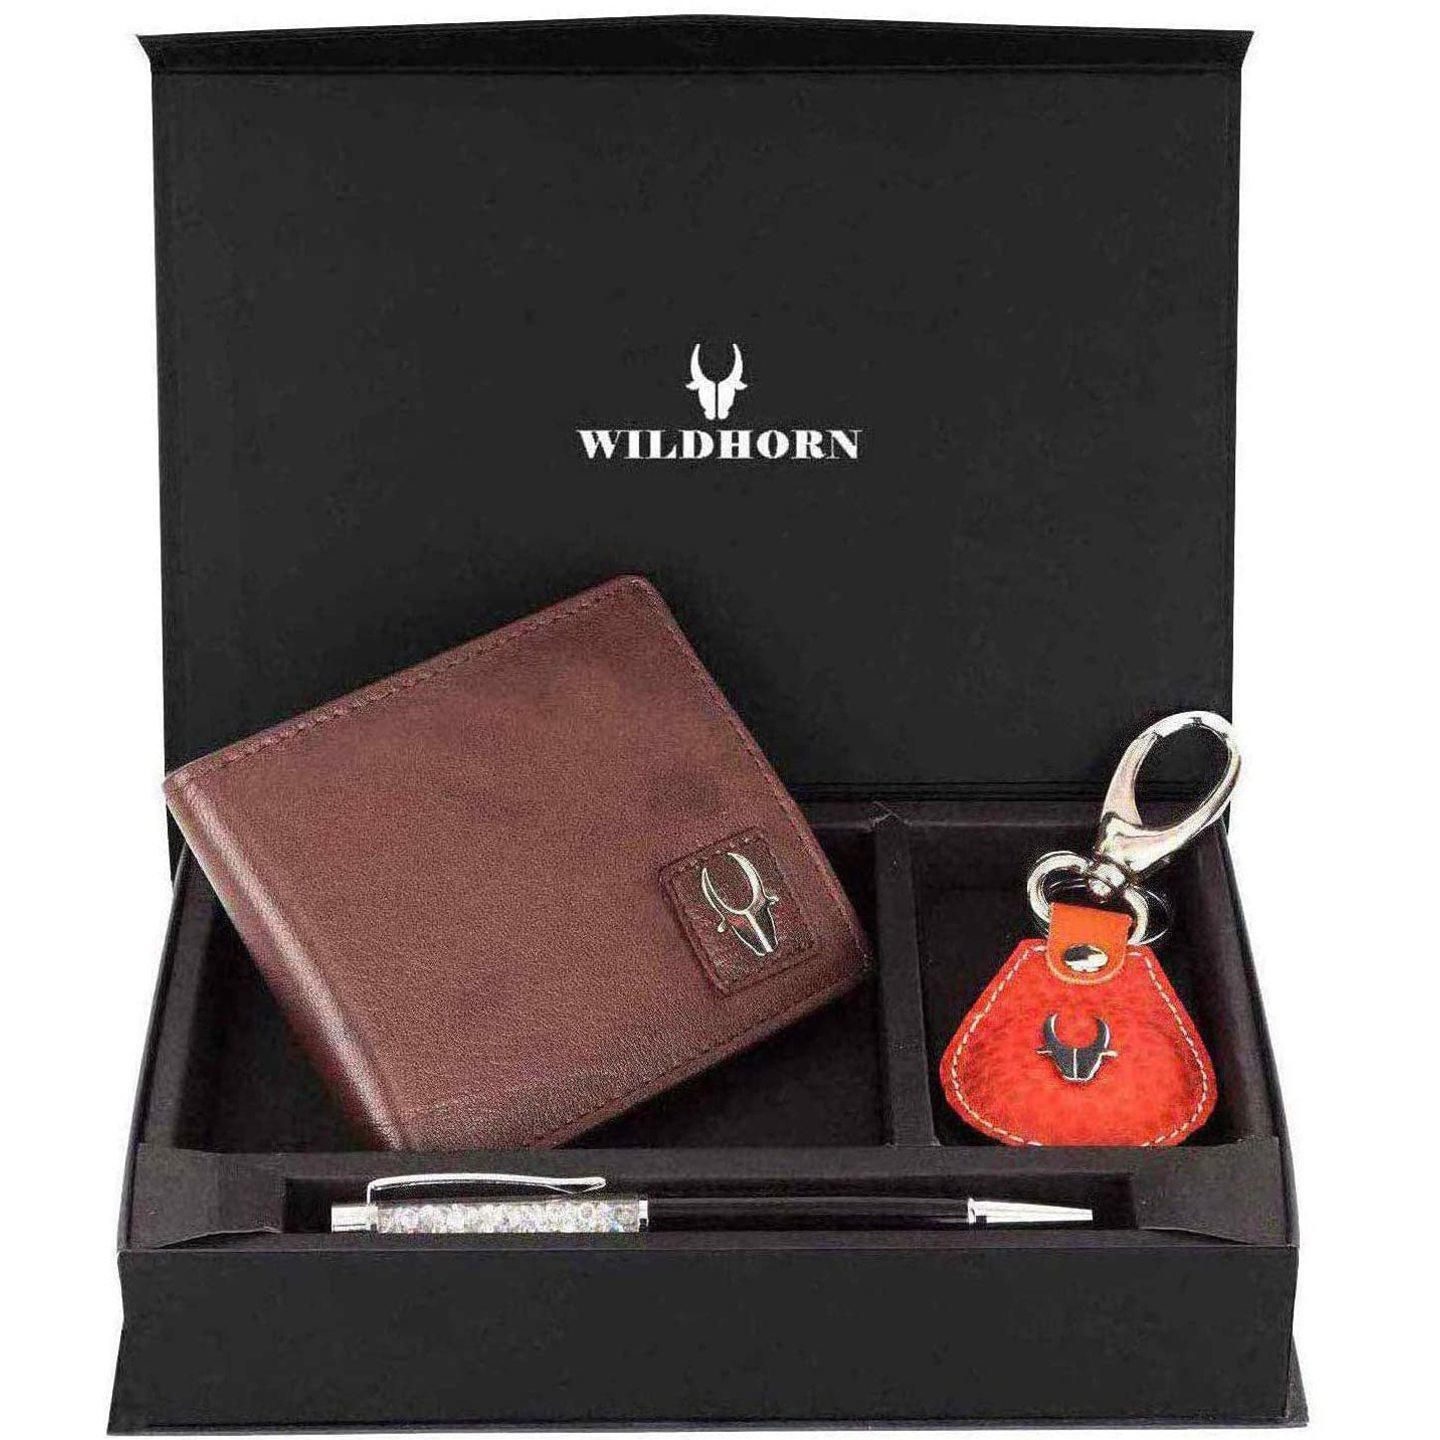 WILDHORN Leather Wallet Keychain & Pen Combo for Men I Gift Hamper